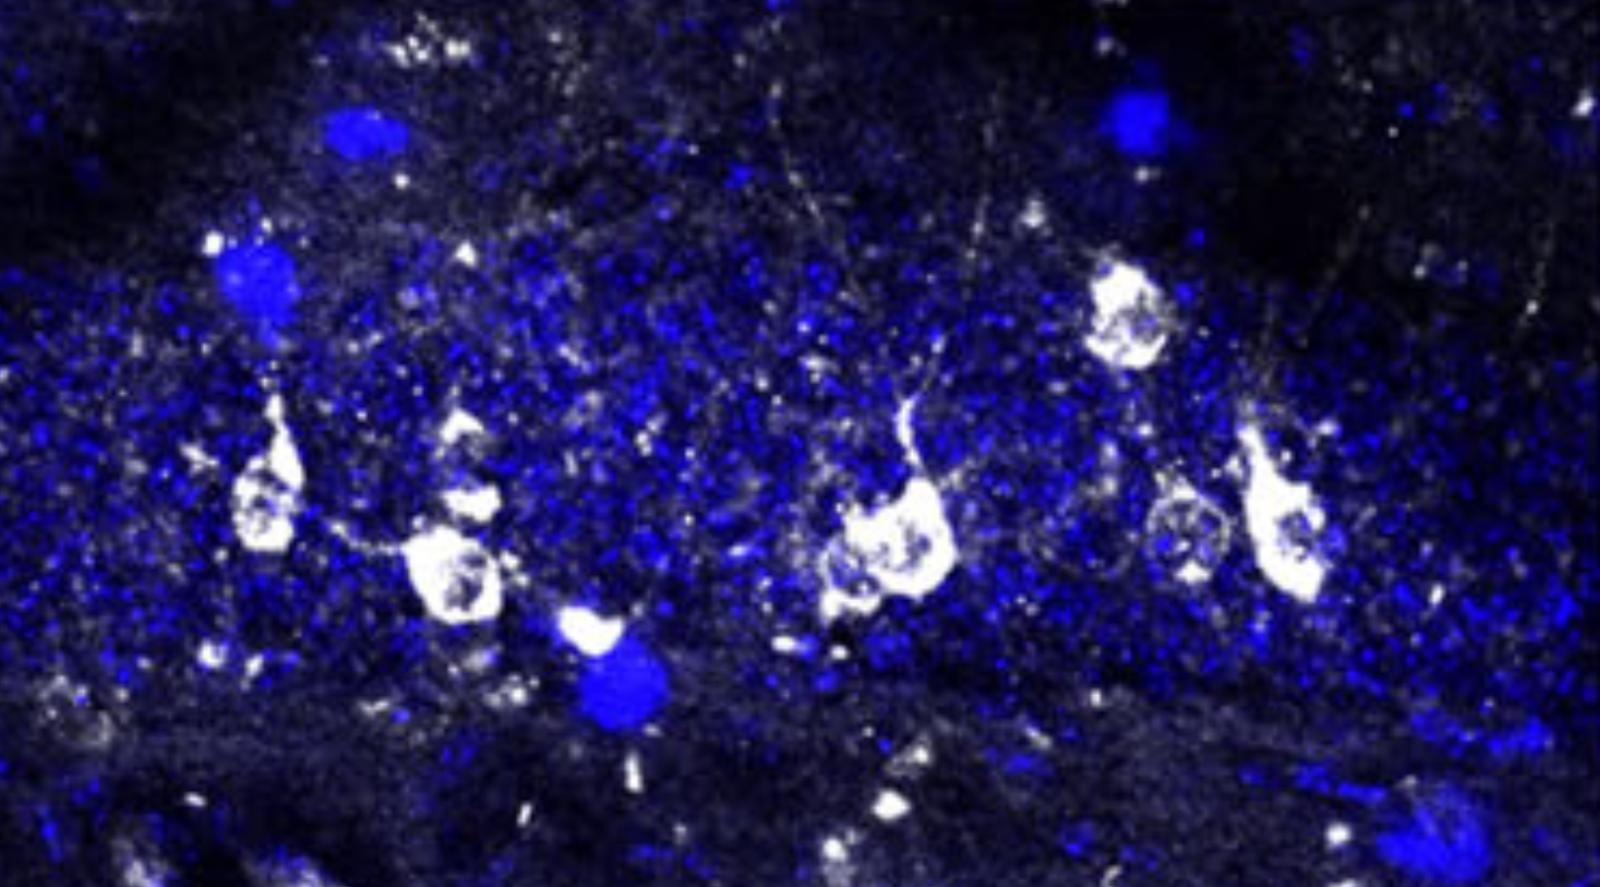 neurons as seen under a microscope